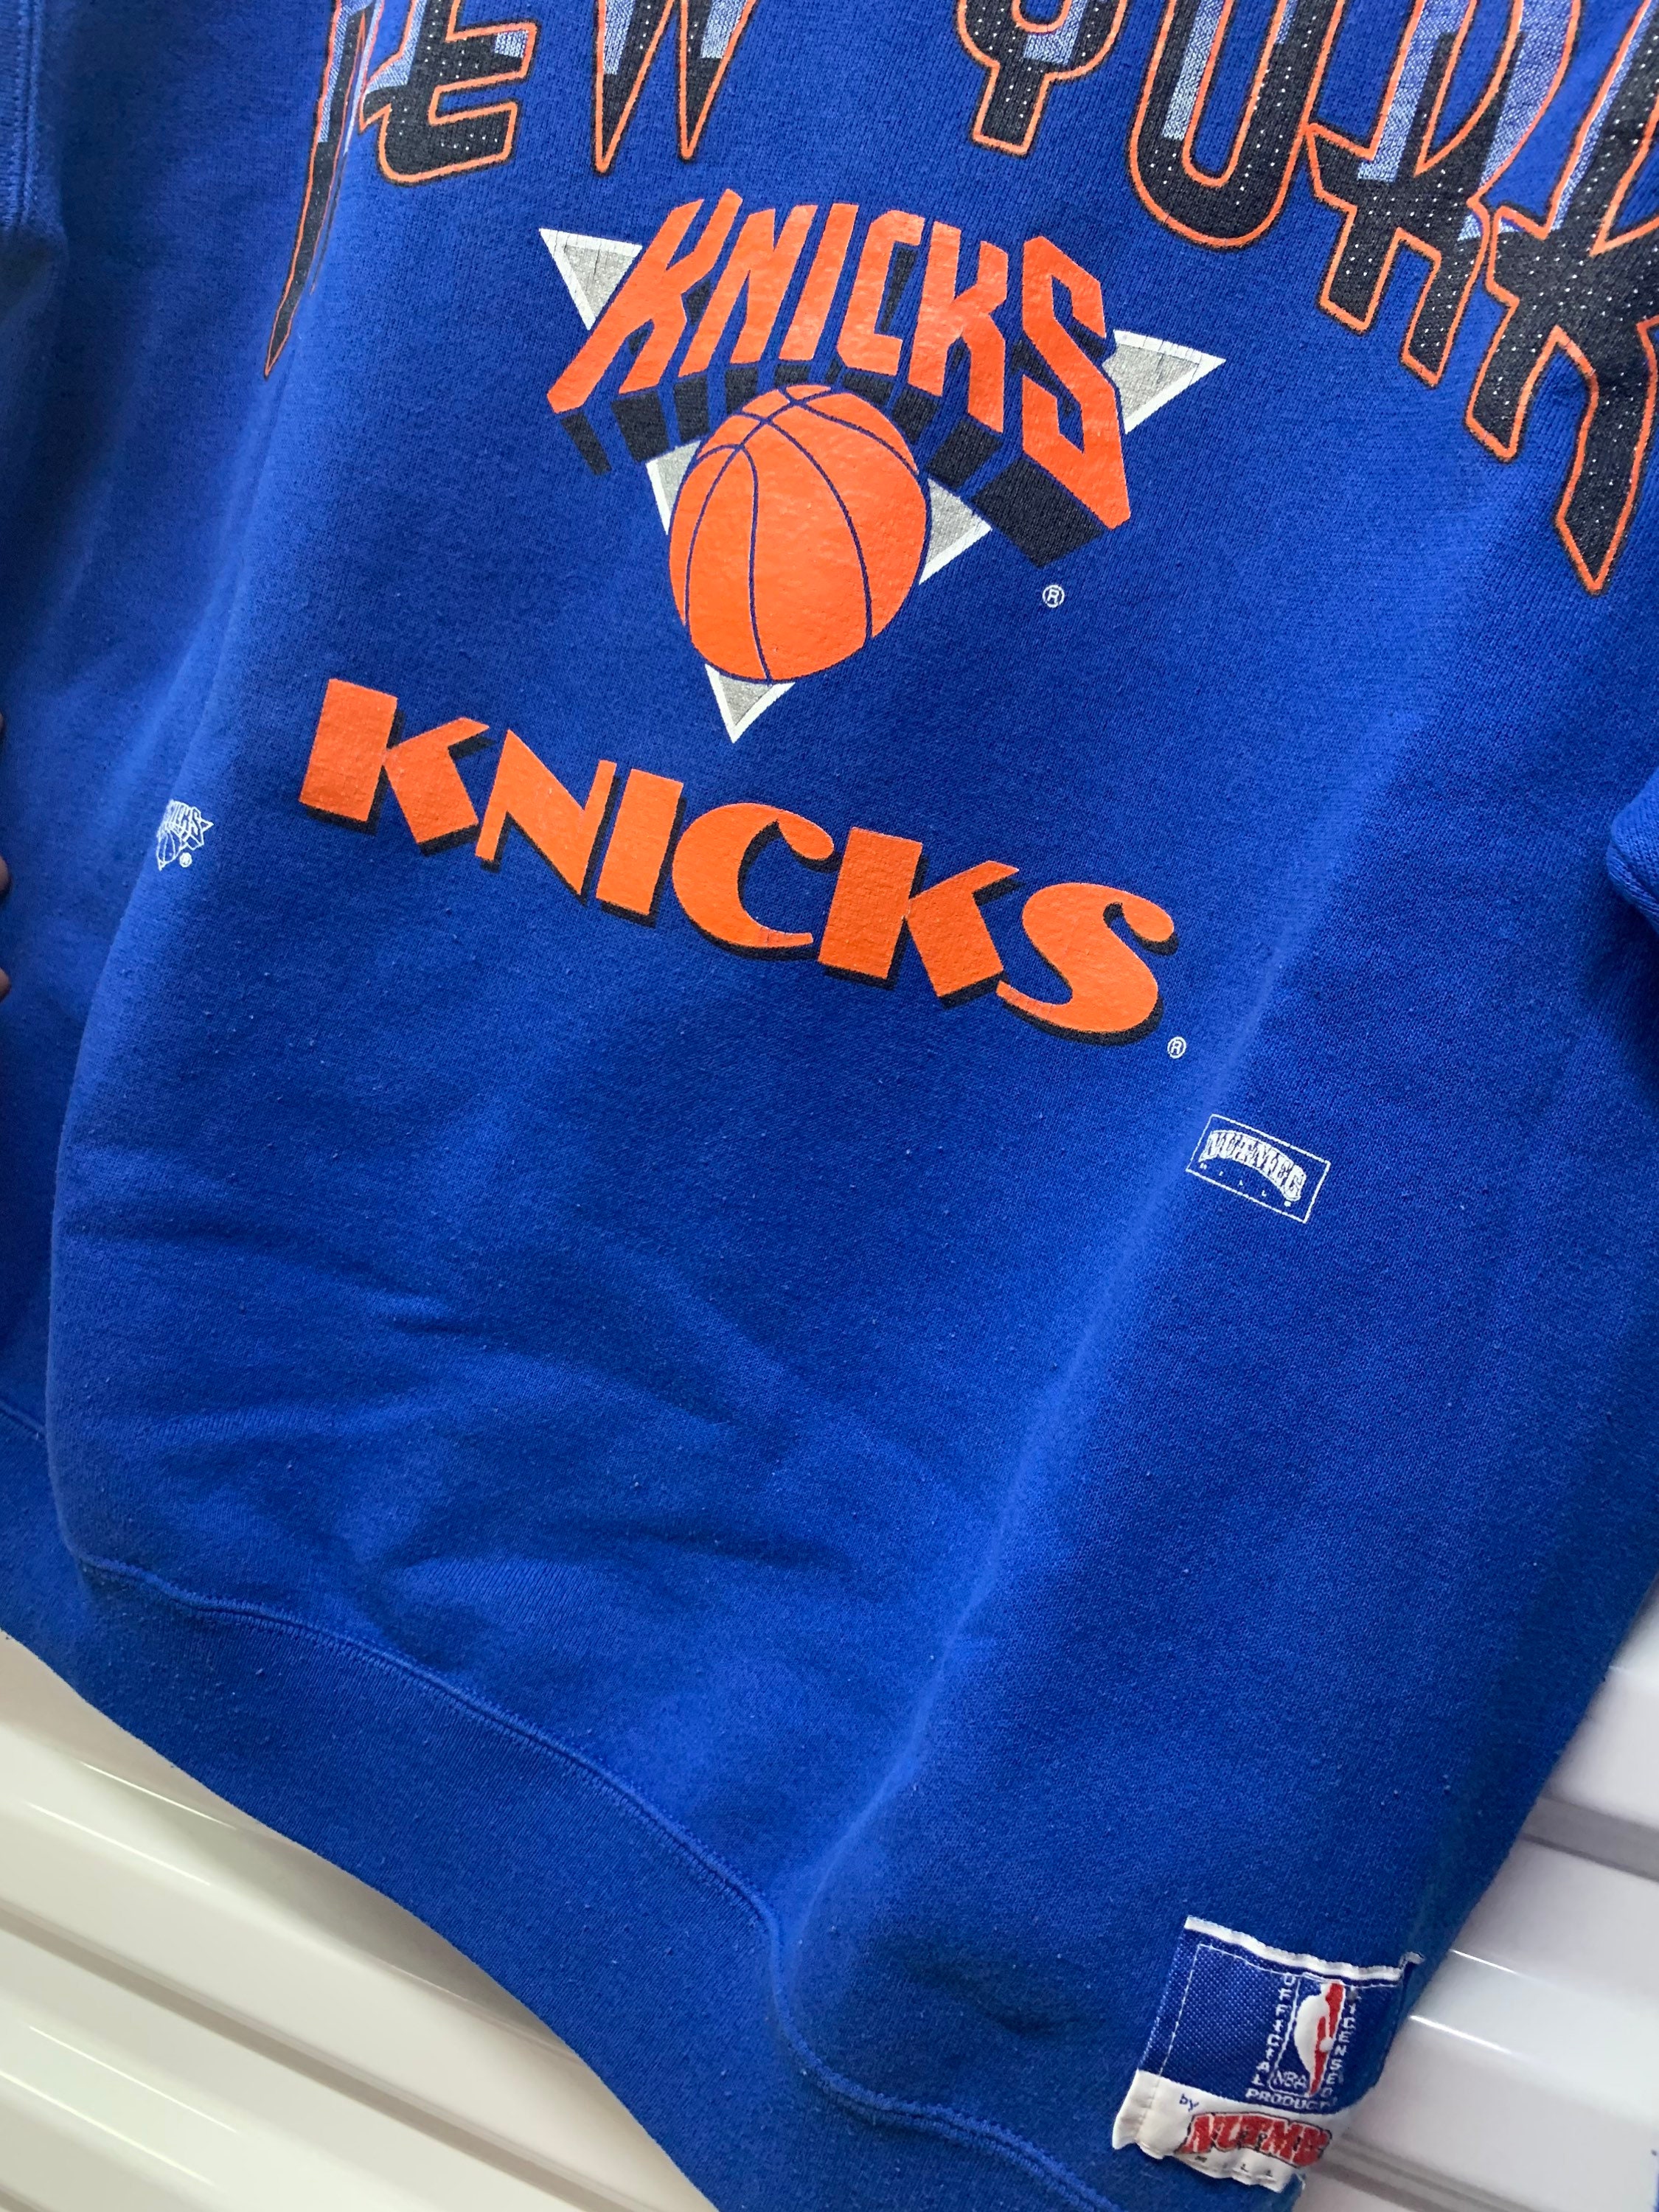 Hottertees 90s New York Vintage Knicks Sweatshirt